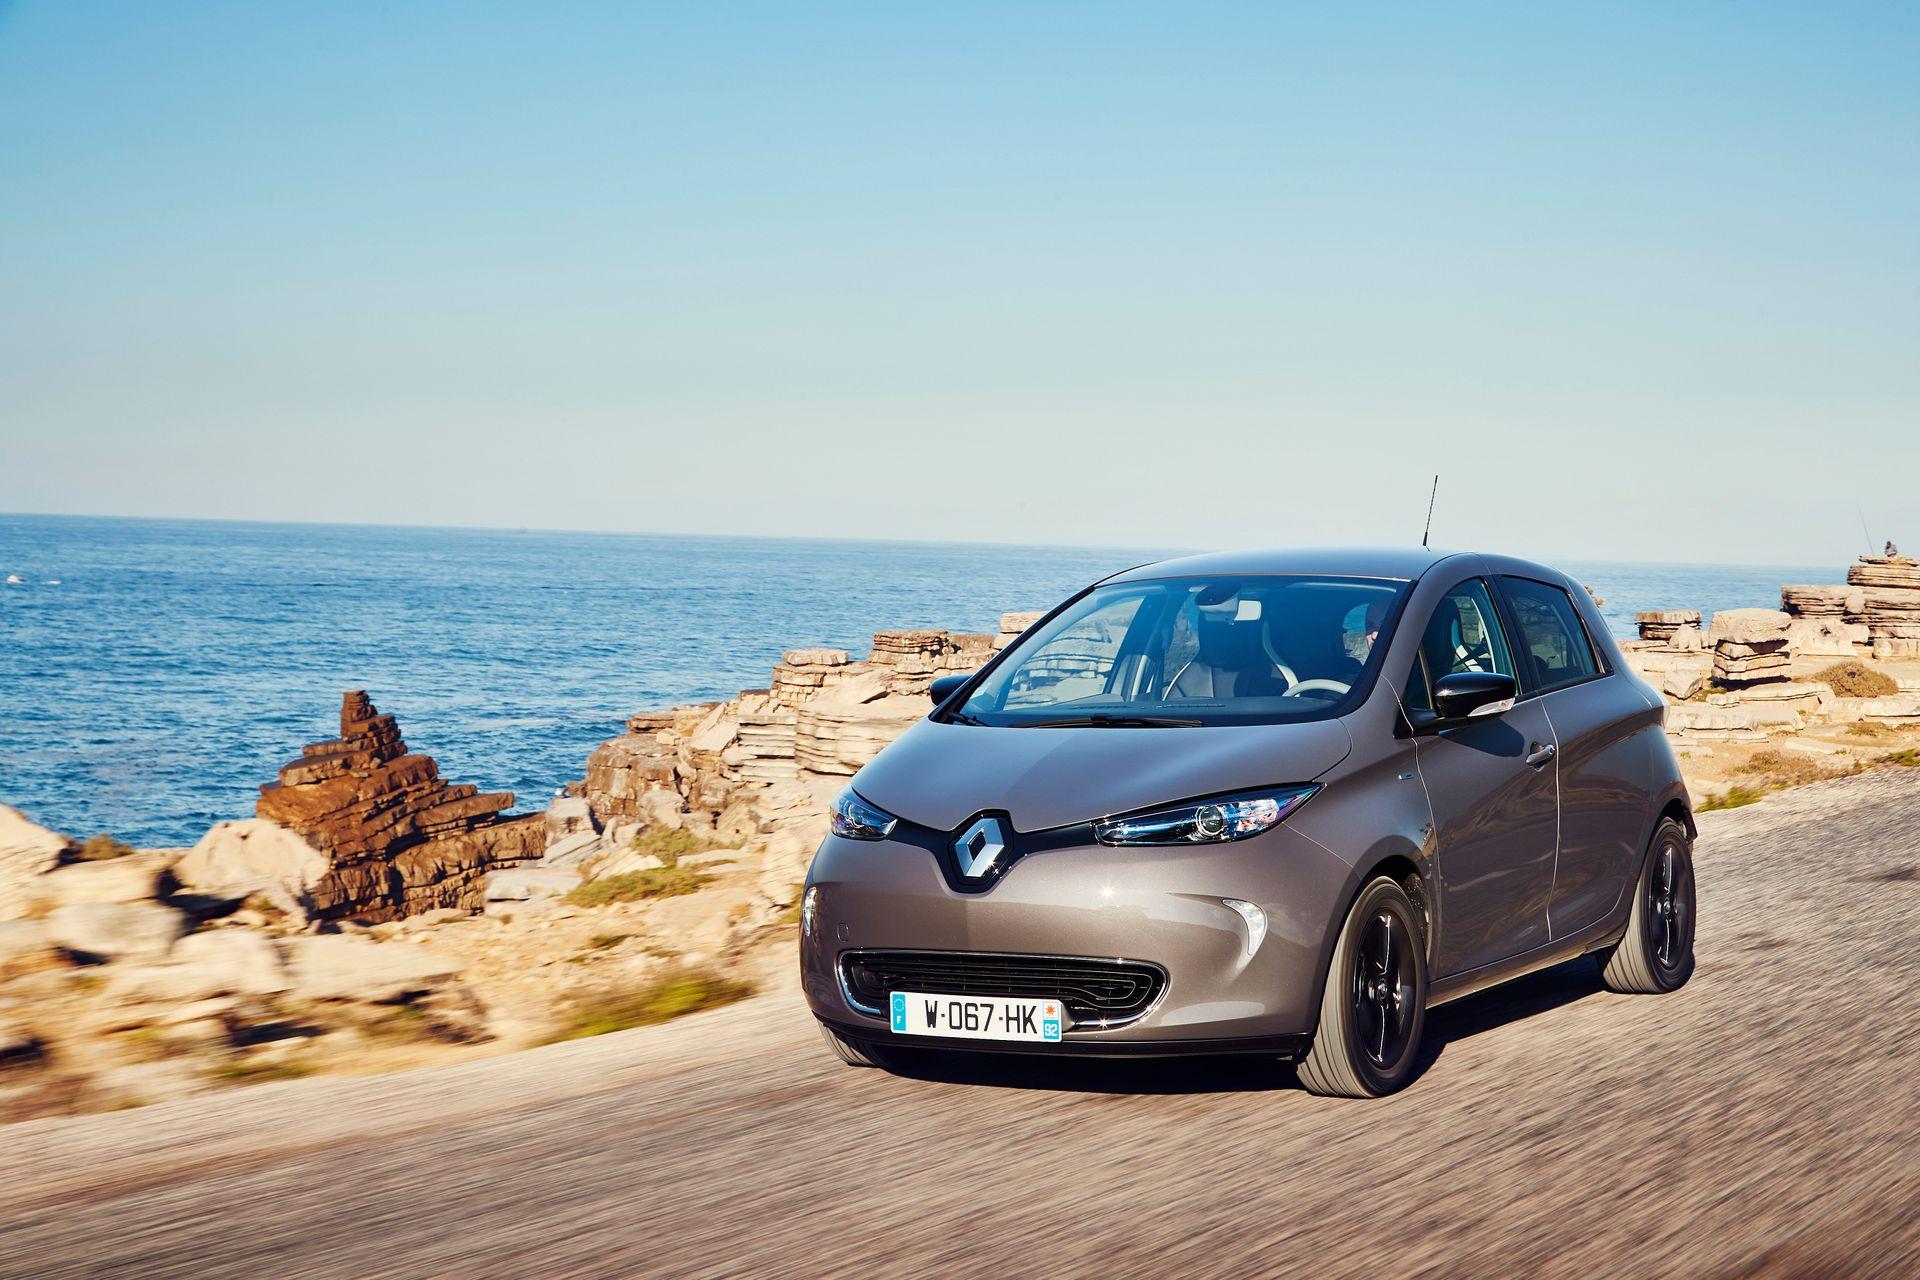 Renault ZOE Evropada eng ko'p sotiladigan elektromobildir